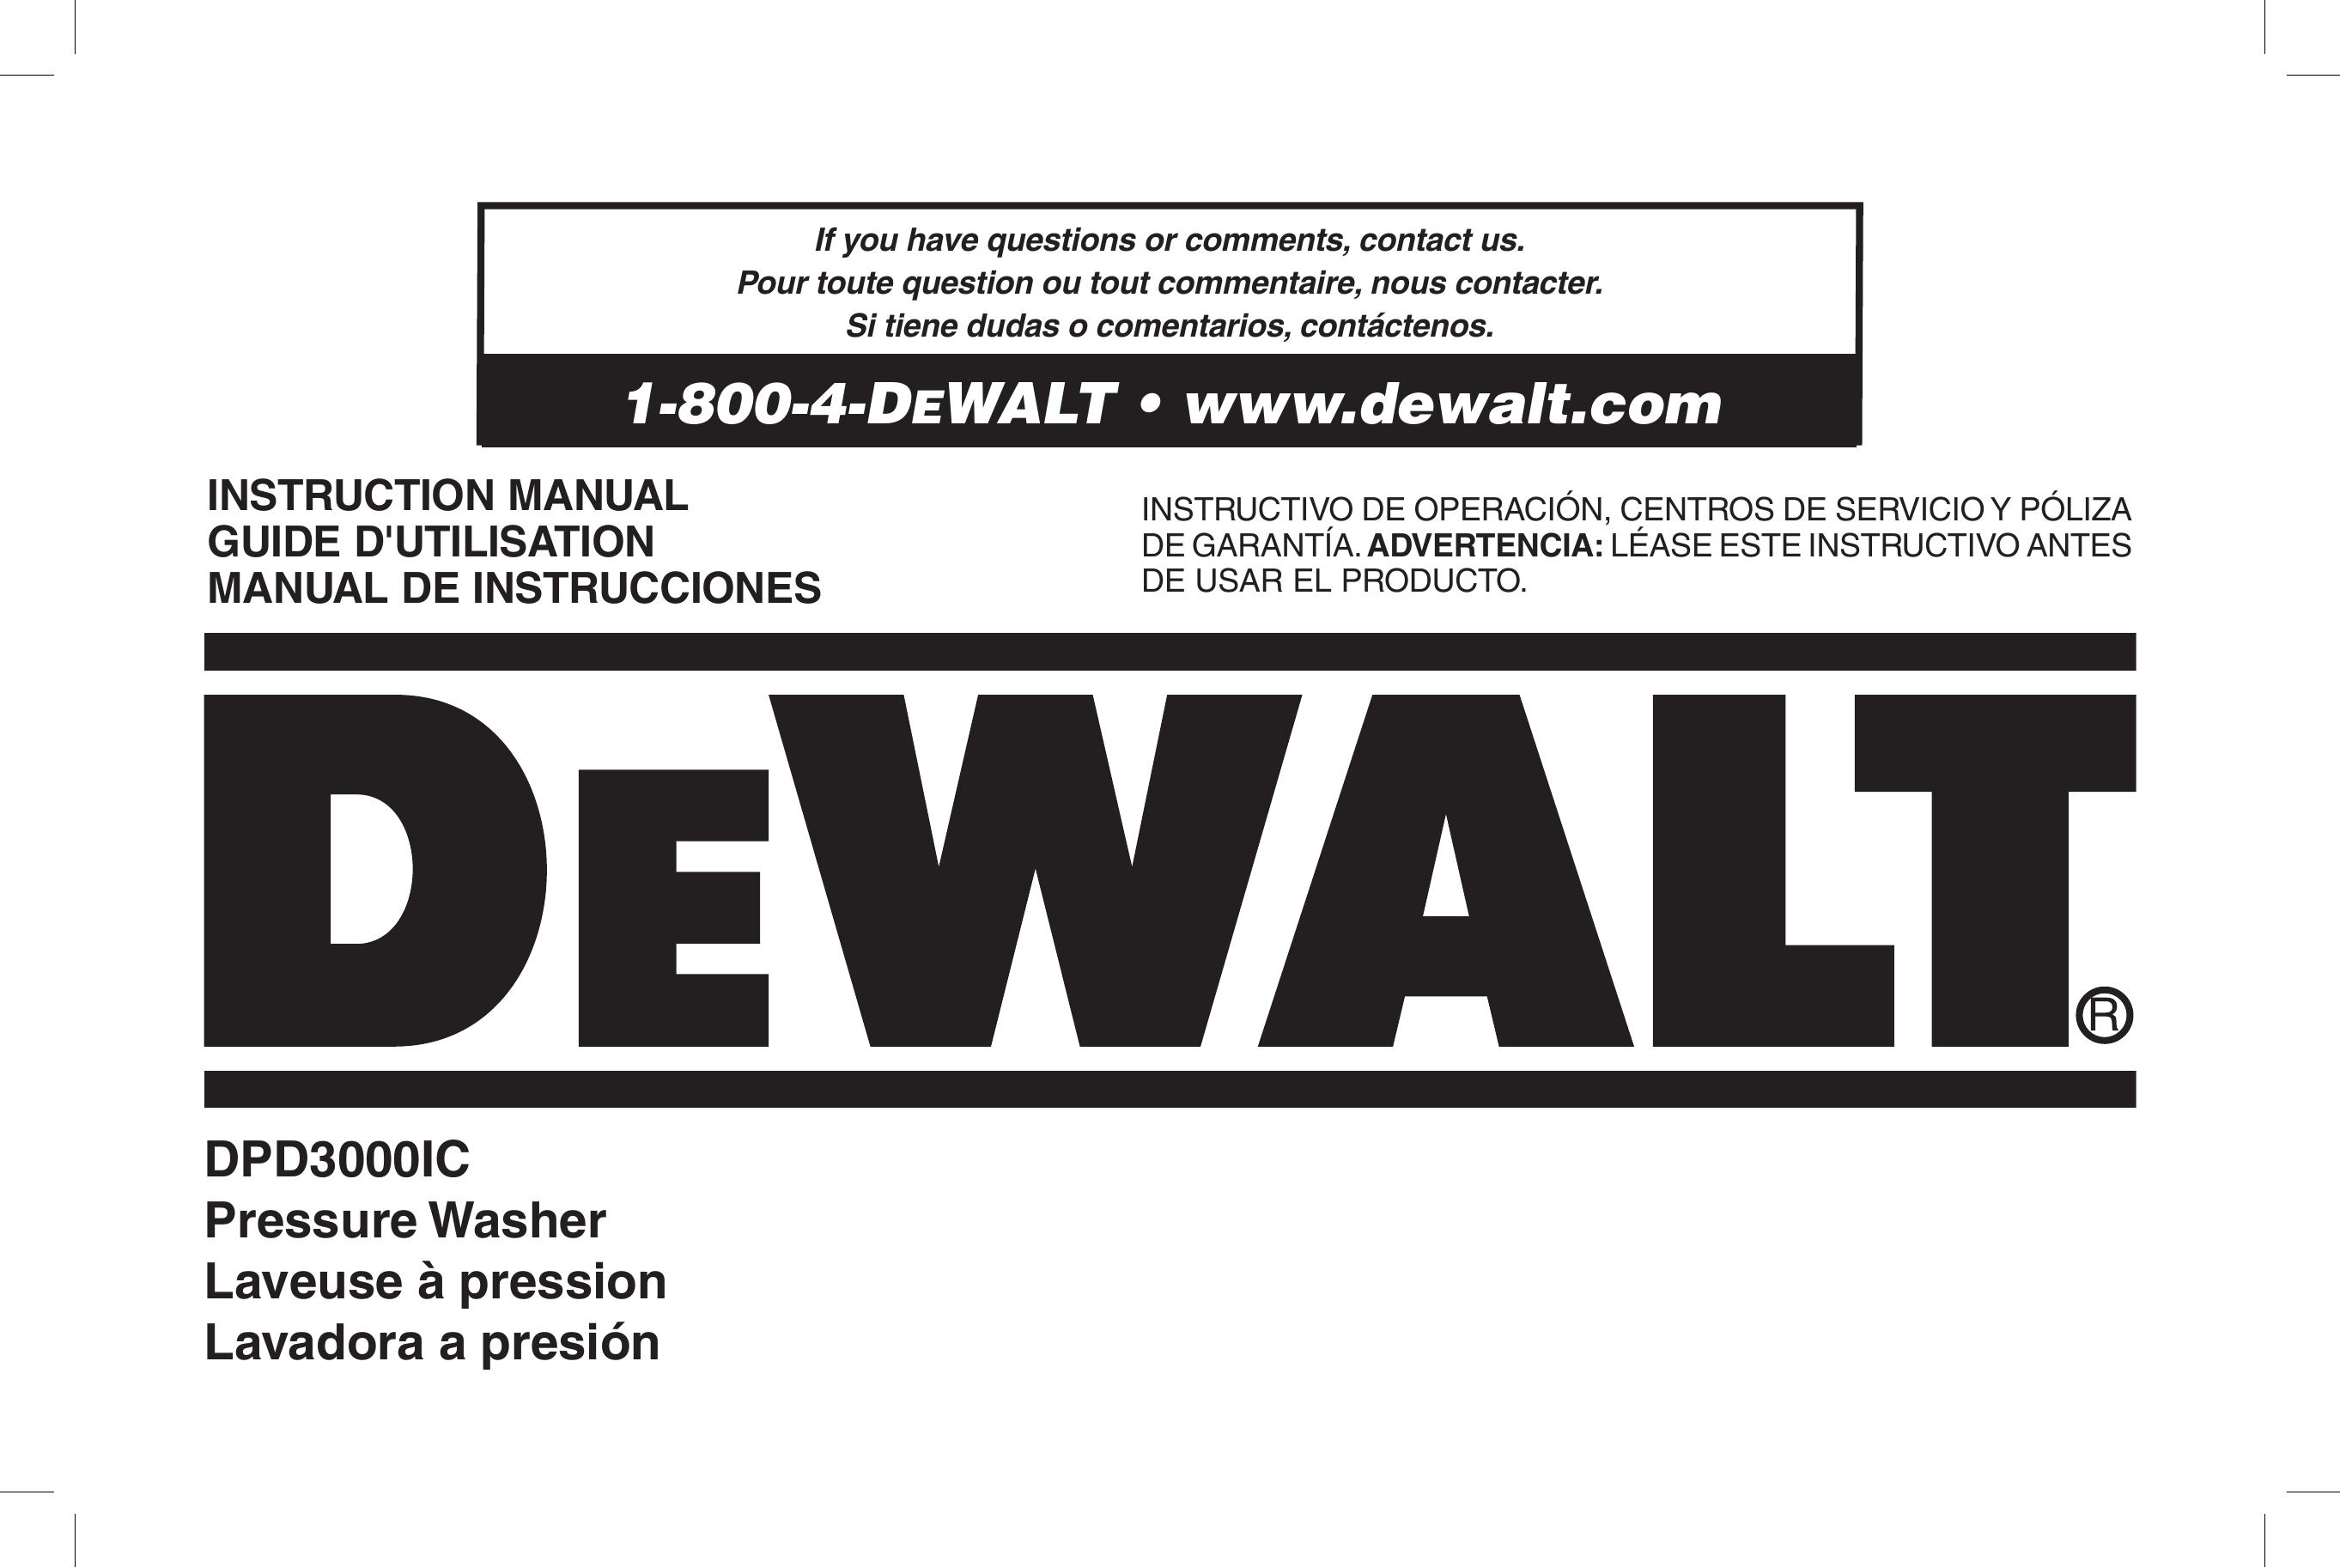 DeWalt N0003431 Pressure Washer User Manual